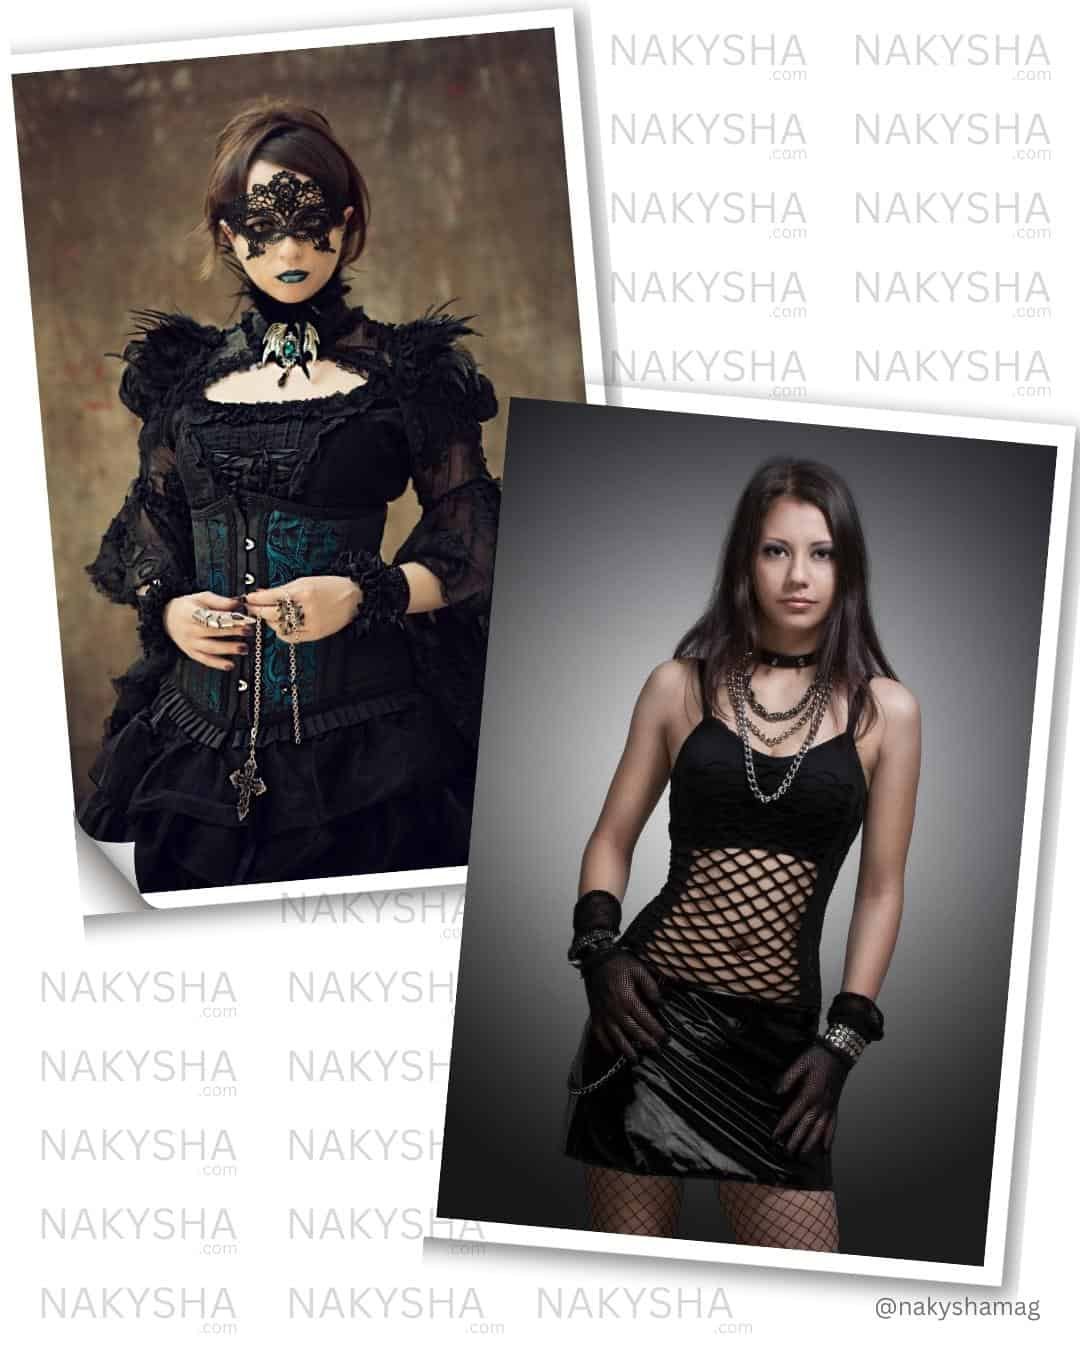 Evolution of Gothic Fashion